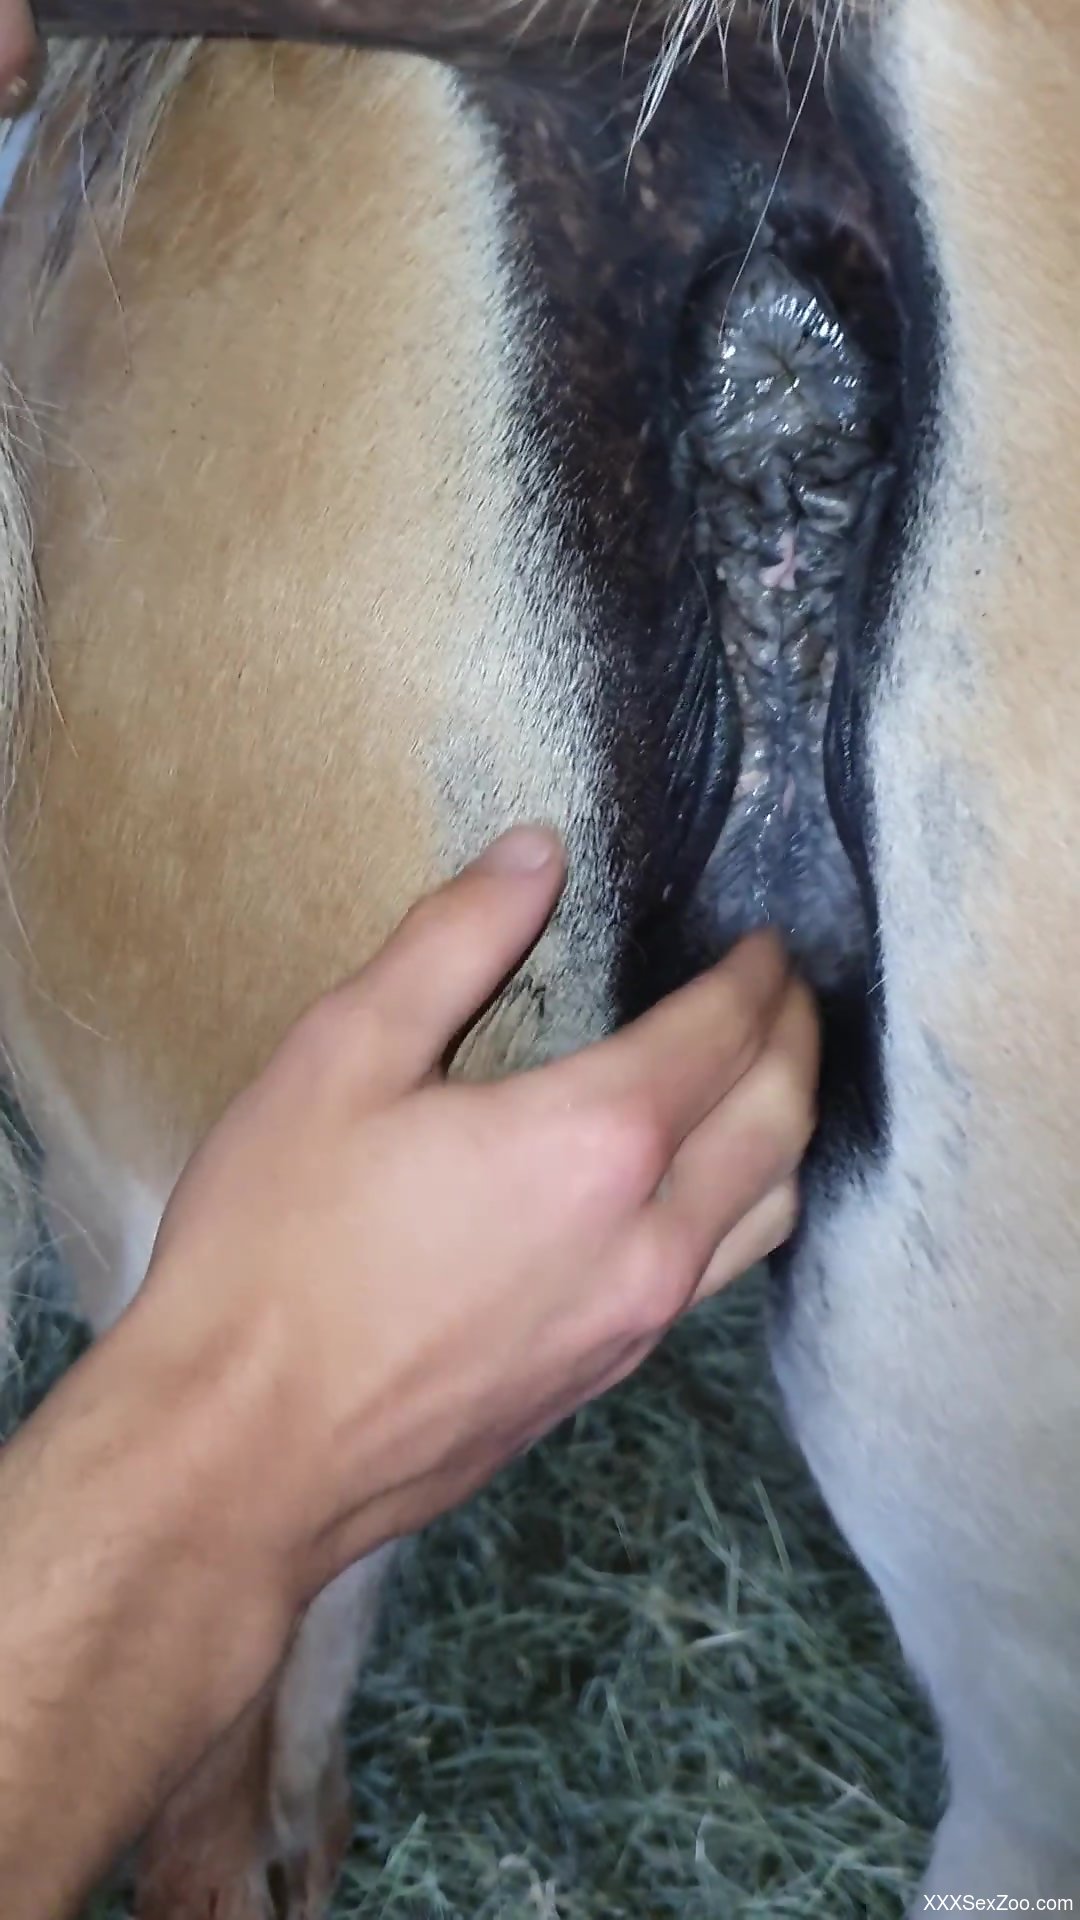 Xxx Horse Sex Chudai - Horny guy finger fucks his female horse in harsh modes - XXXSexZoo.com